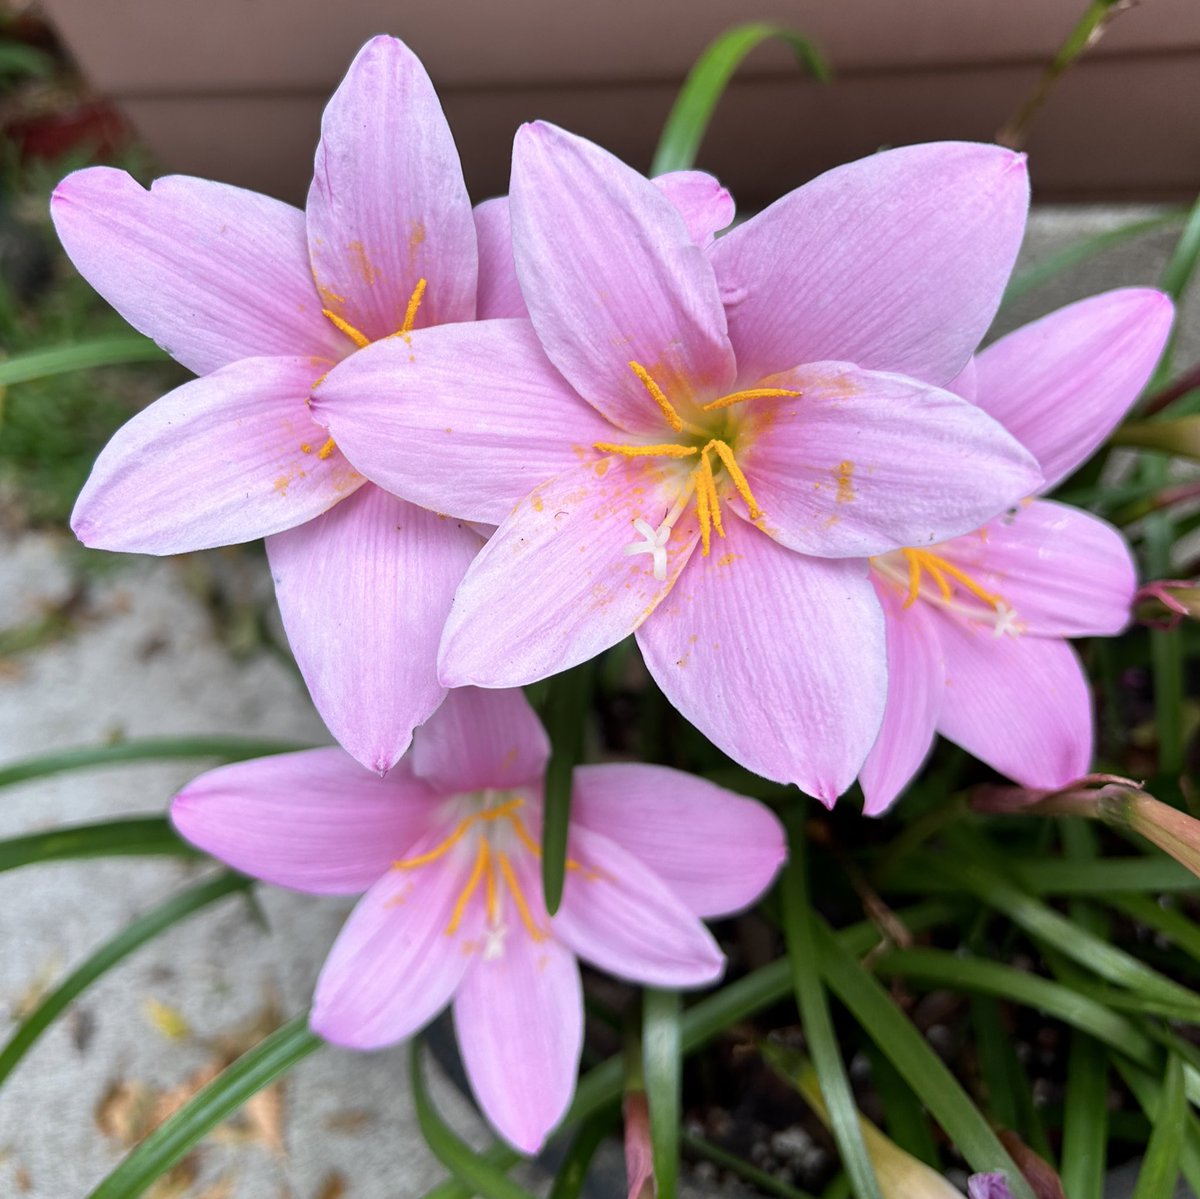 Zephyranthes or rain lilies doing what they do best after lots of rain. 💦💦😍💘

#Pink #GardeningTwitter #Flowers #flowerphotography #Gardening #pinkflowers #MyGarden #BeautifulFlowers #Todaysflowers #ILovePink